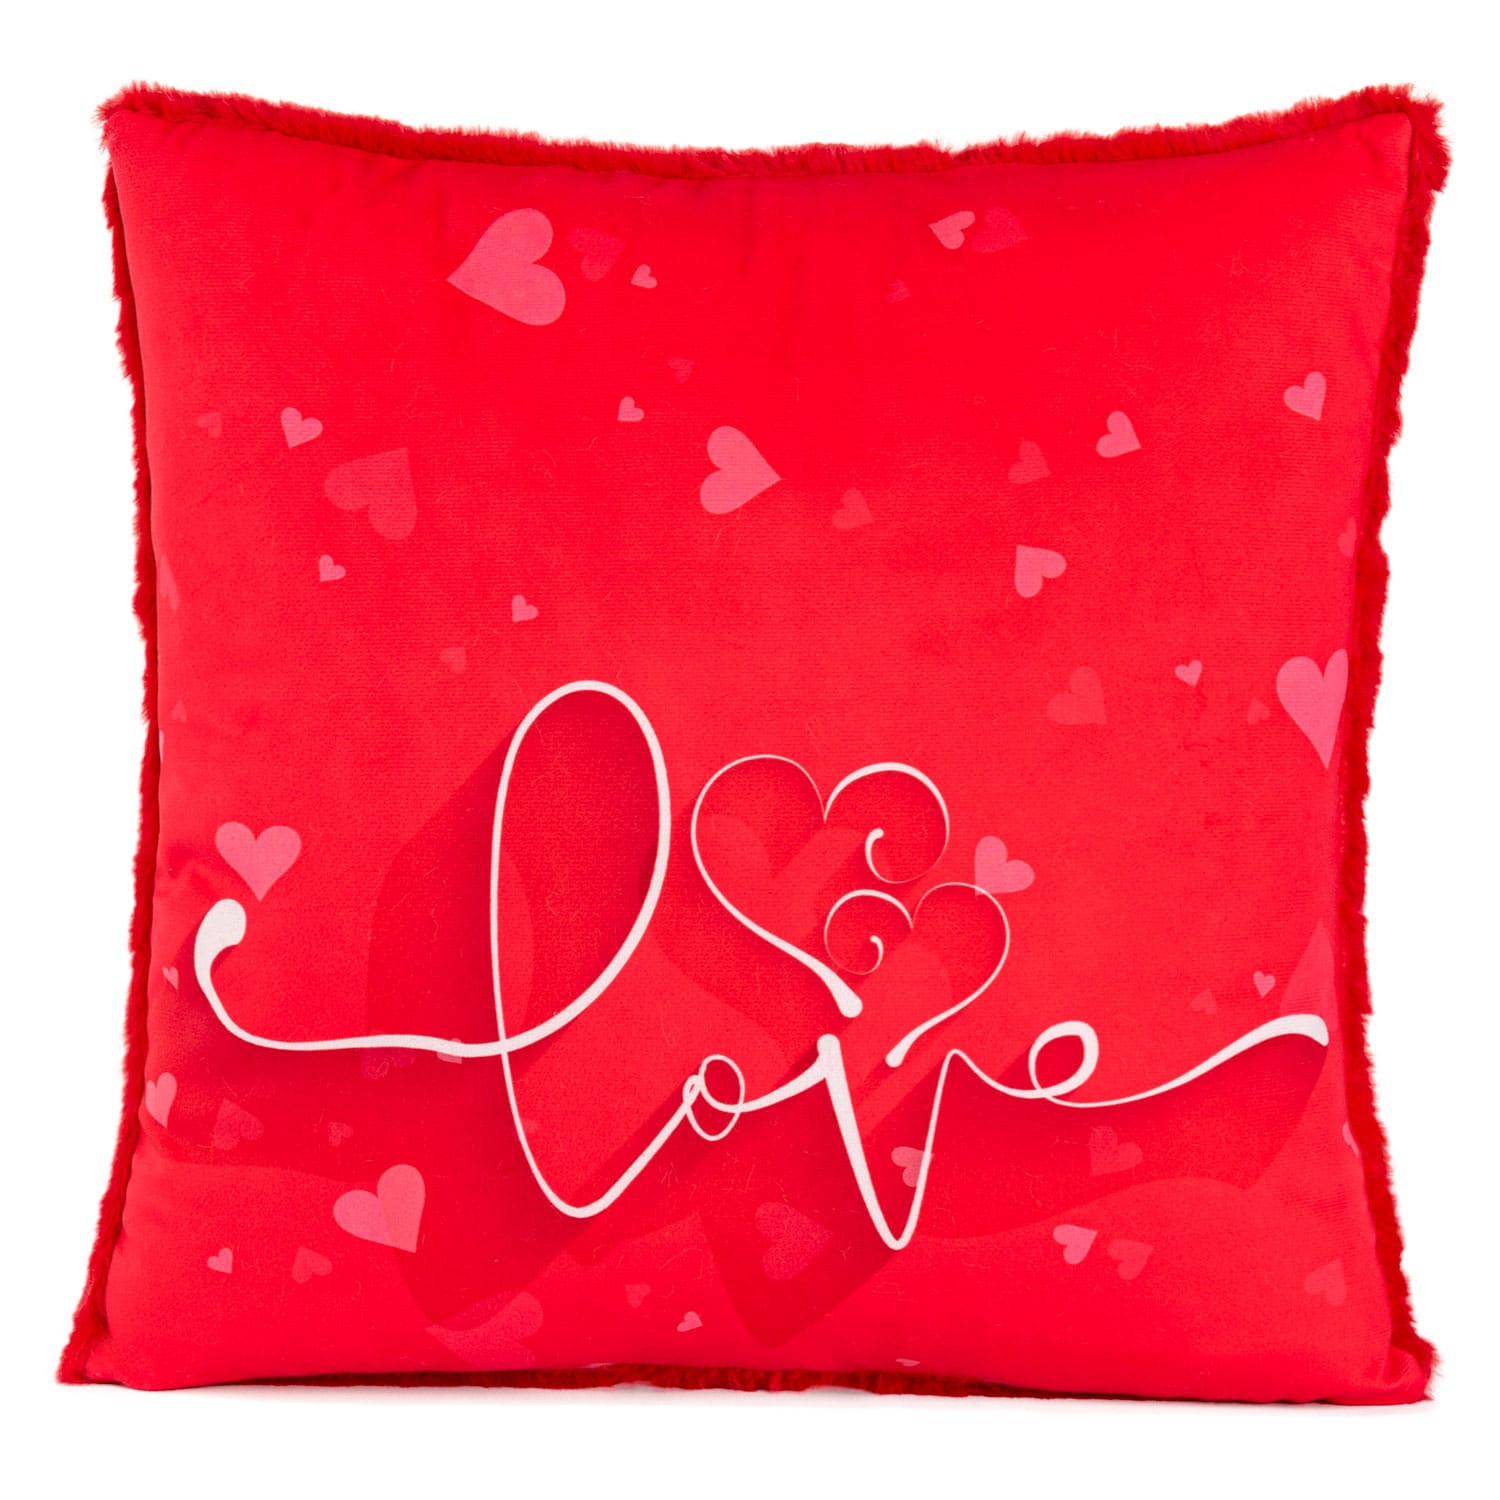 St. Valentine's pillow - 1